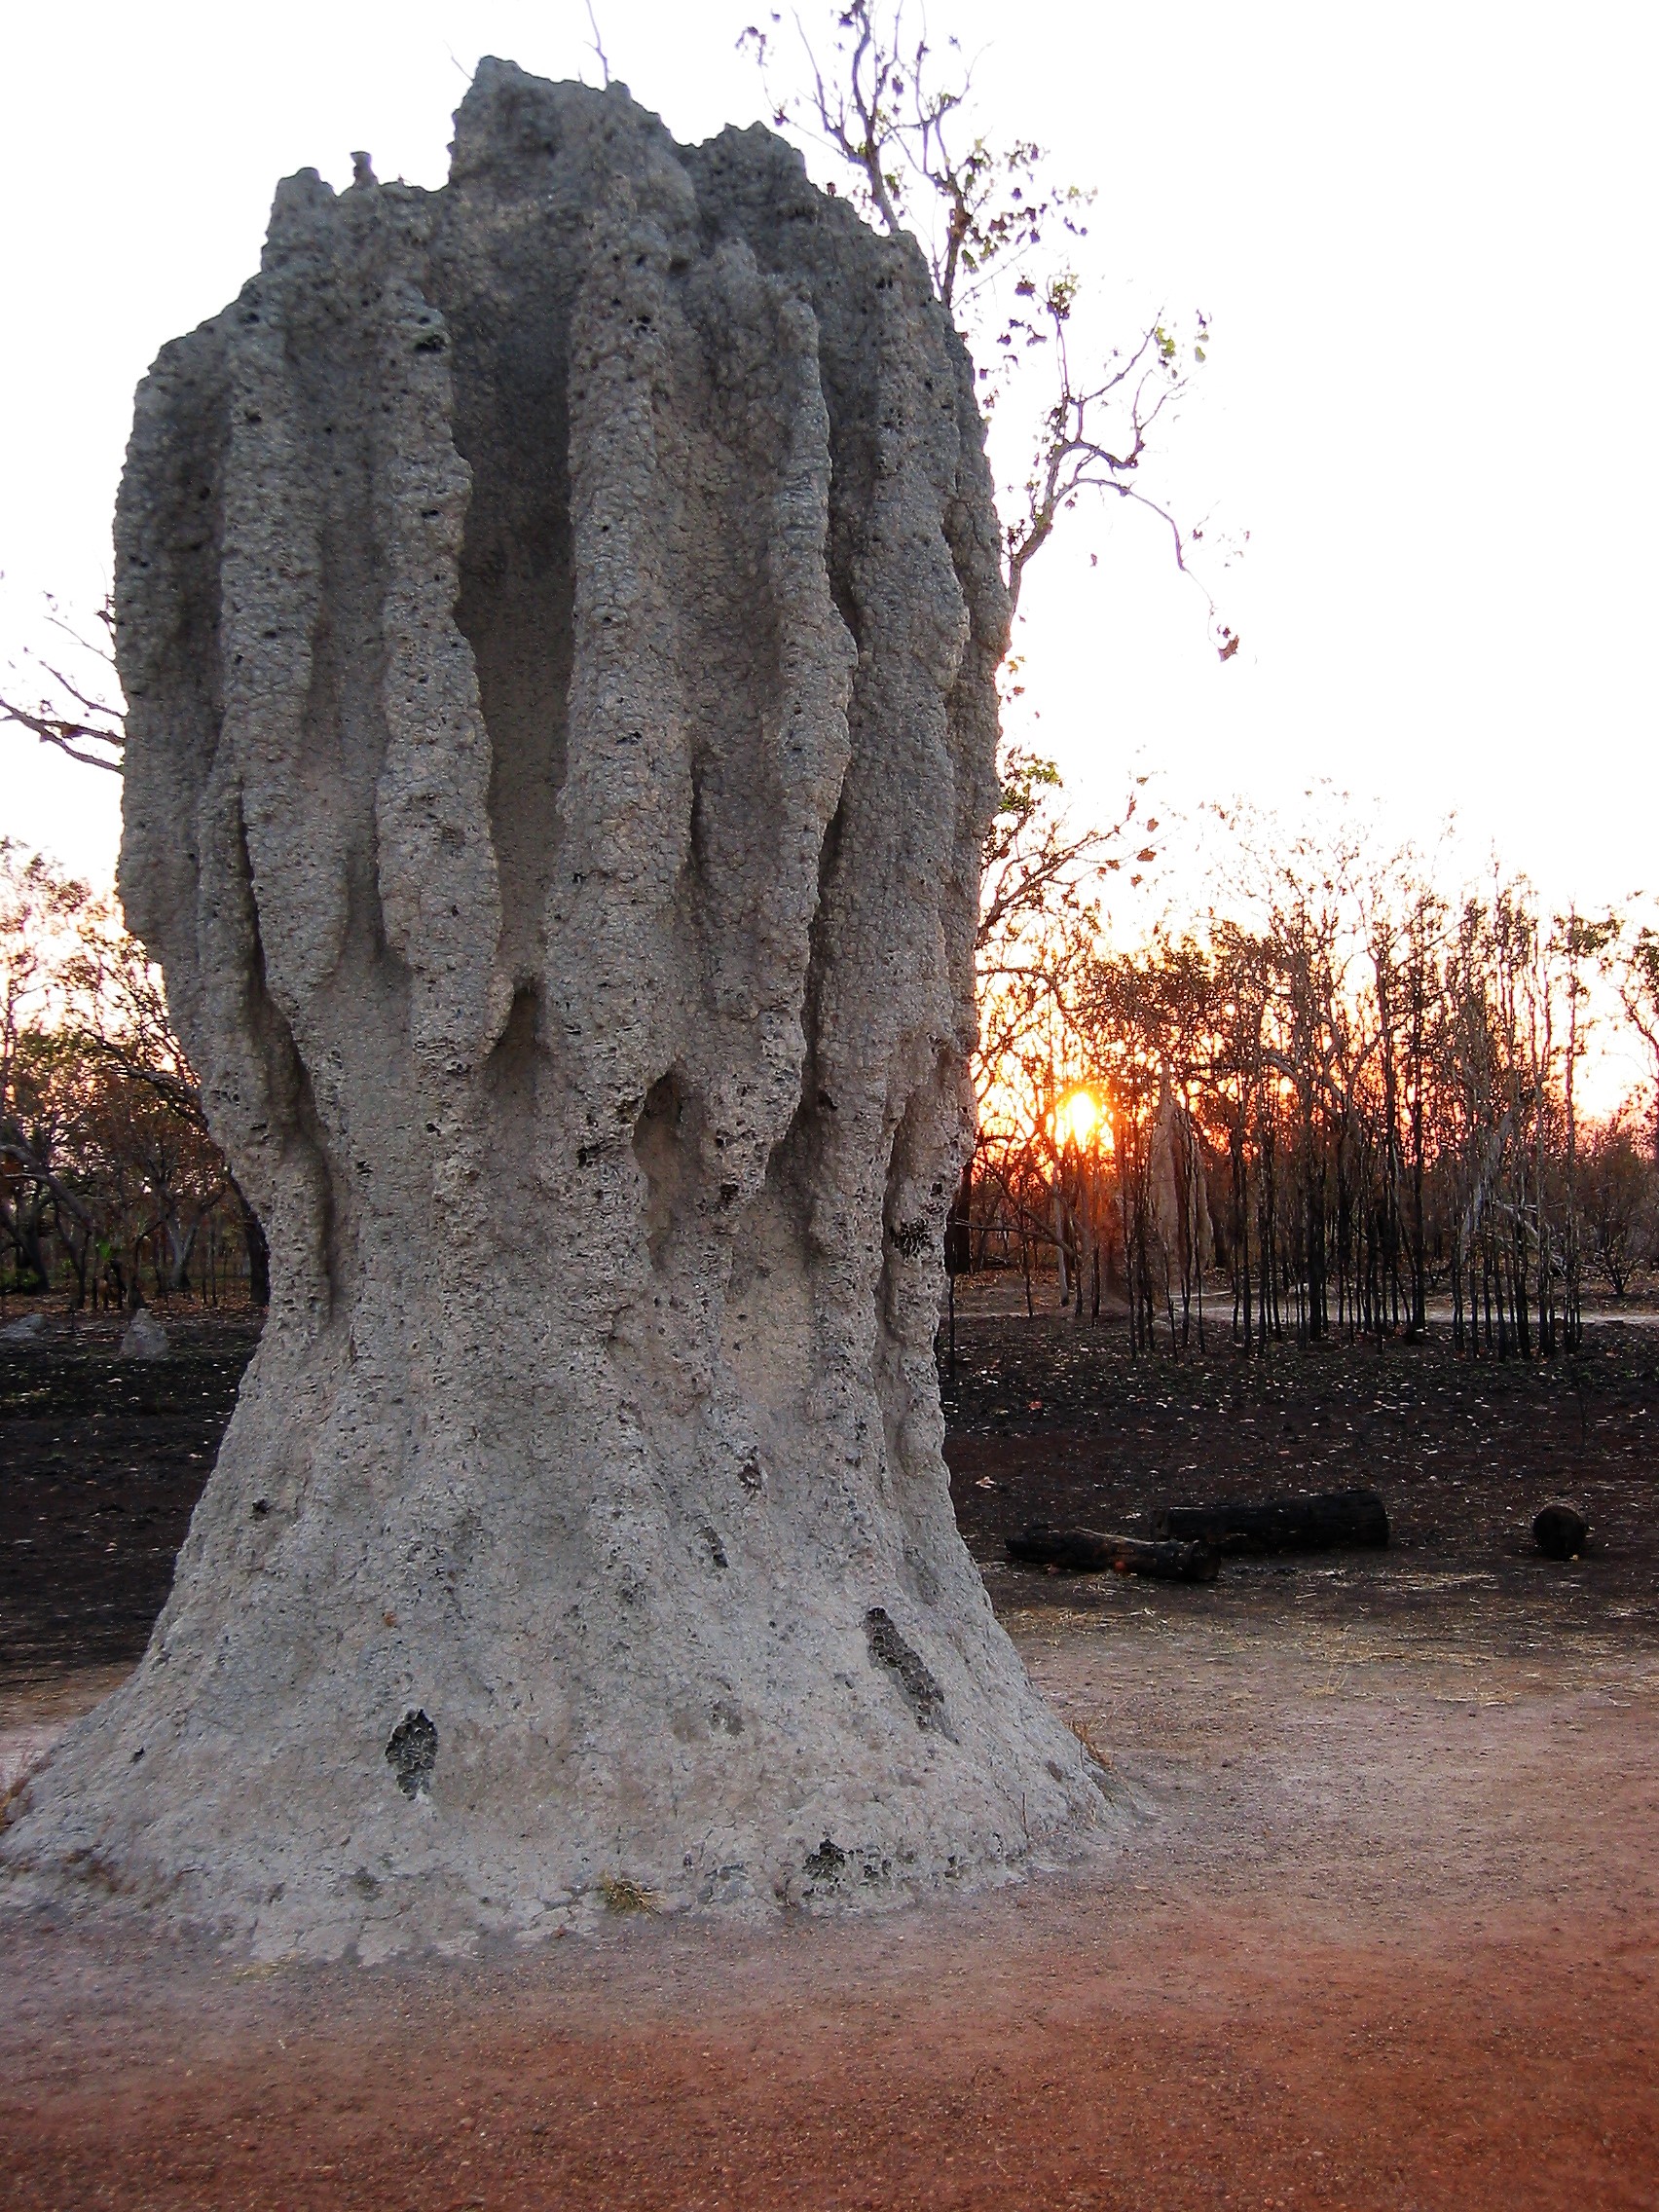 Termite mound, Kakadu National Park, Australia